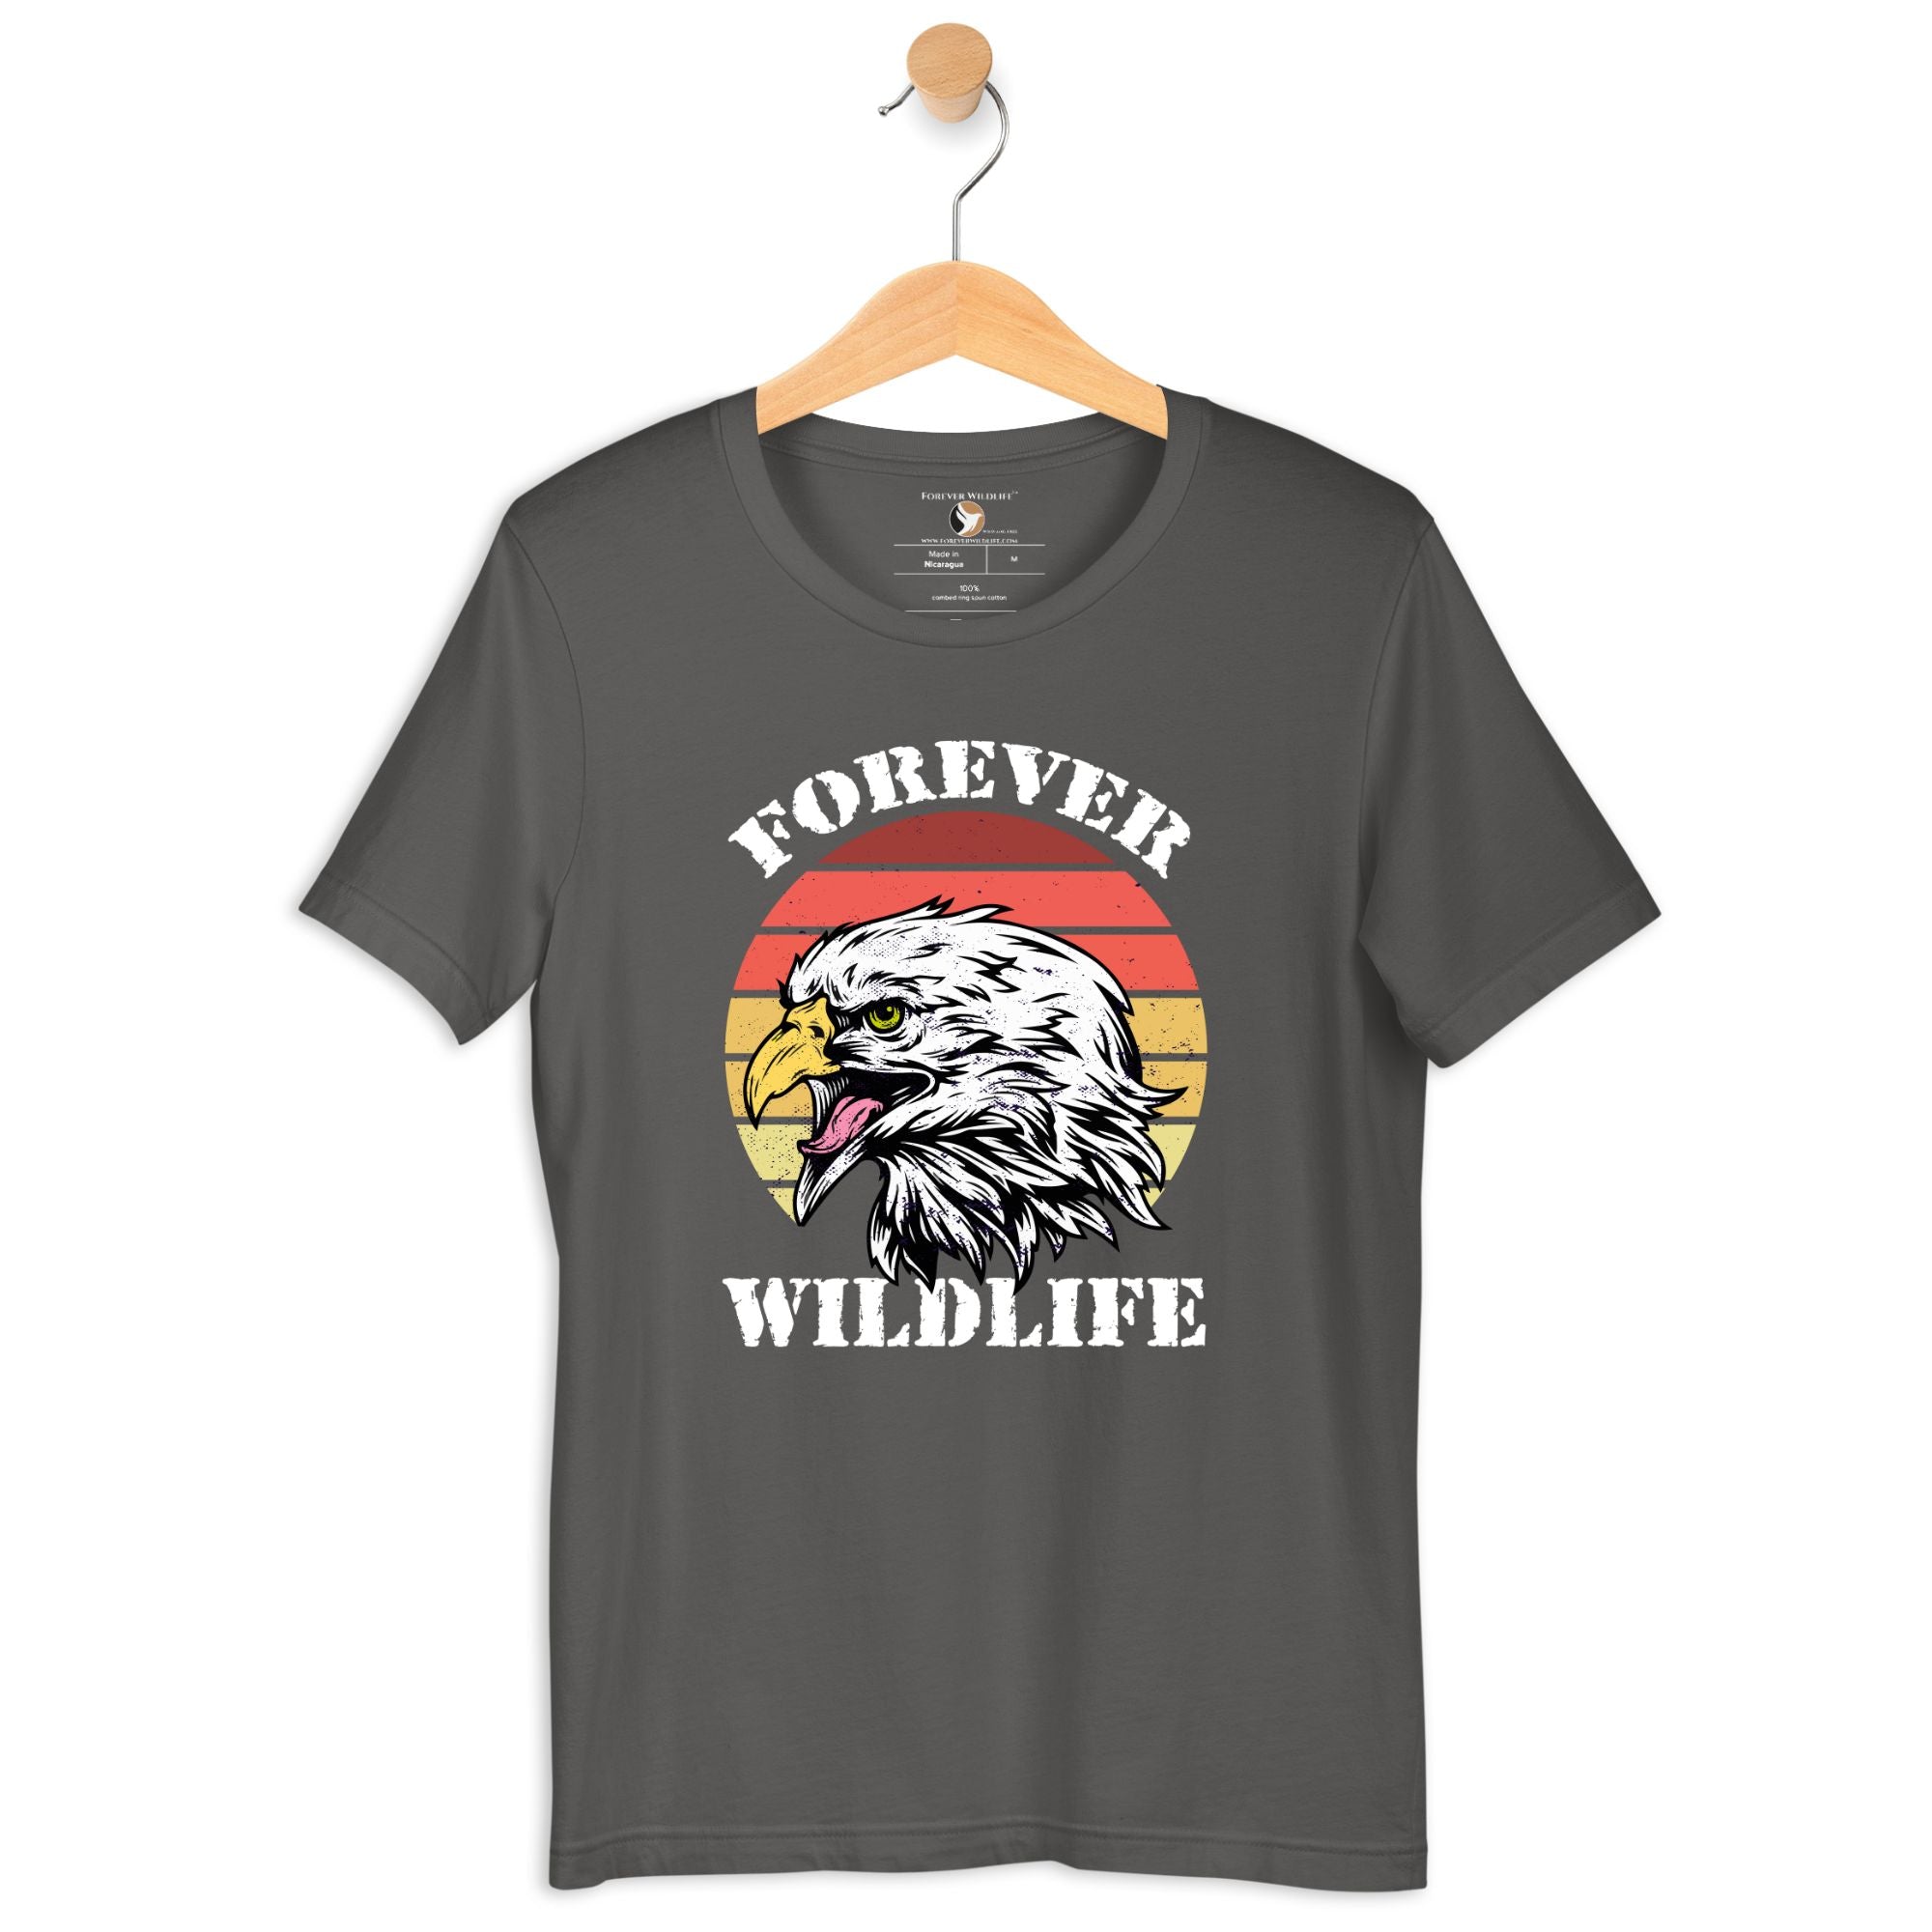 Eagle T-Shirt in Asphalt – Premium Wildlife T-Shirt Design, Eagle Shirts and Wildlife Clothing from Forever Wildlife